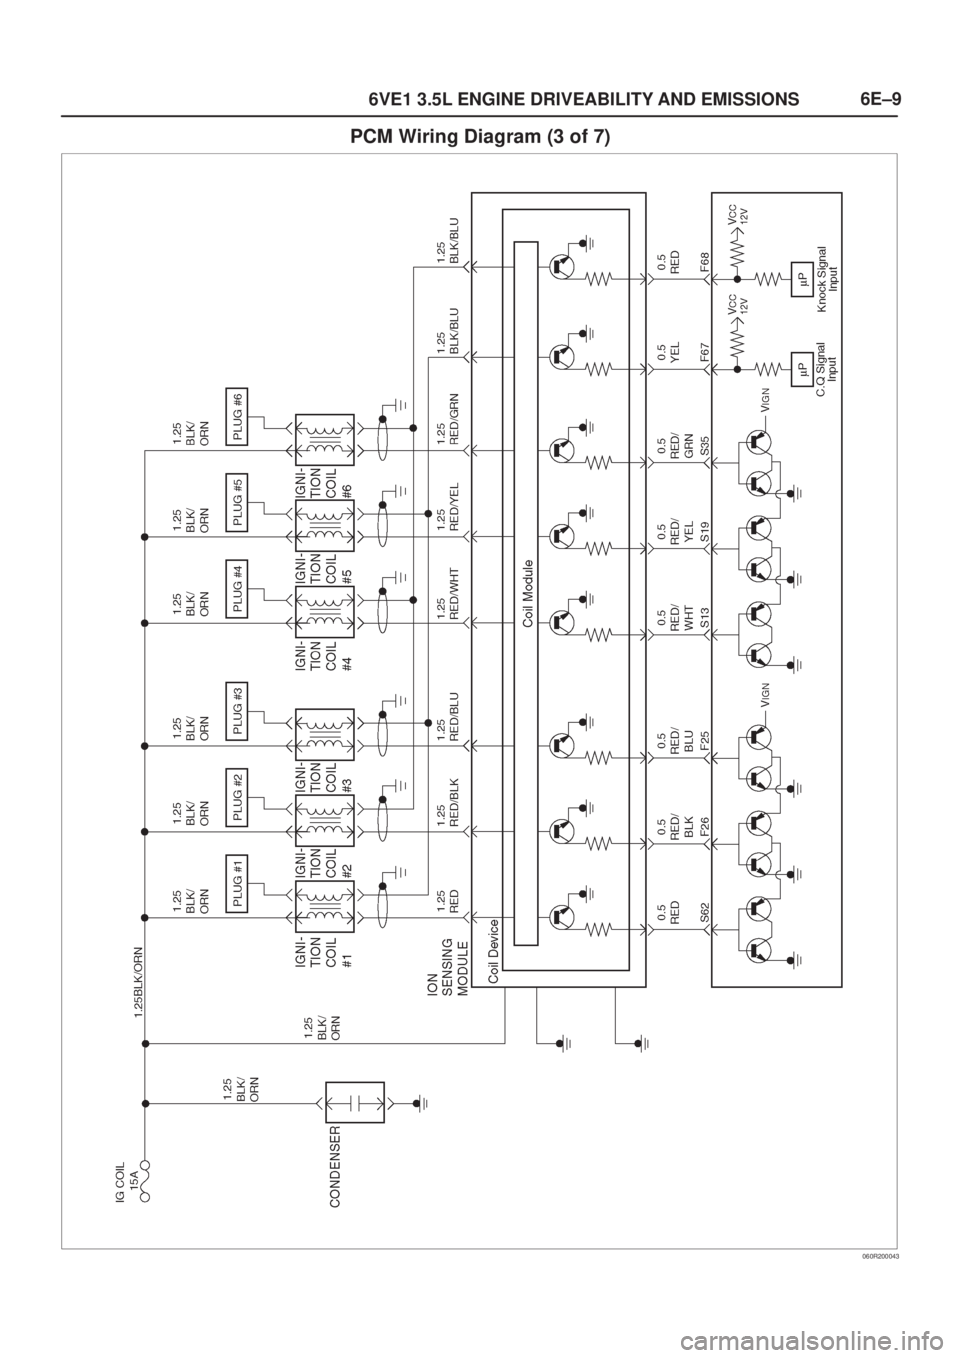 ISUZU AXIOM 2002  Service Repair Manual 6E±9
6VE1 3.5L ENGINE DRIVEABILITY AND EMISSIONS
PCM Wiring Diagram (3 of 7)
060R200043 